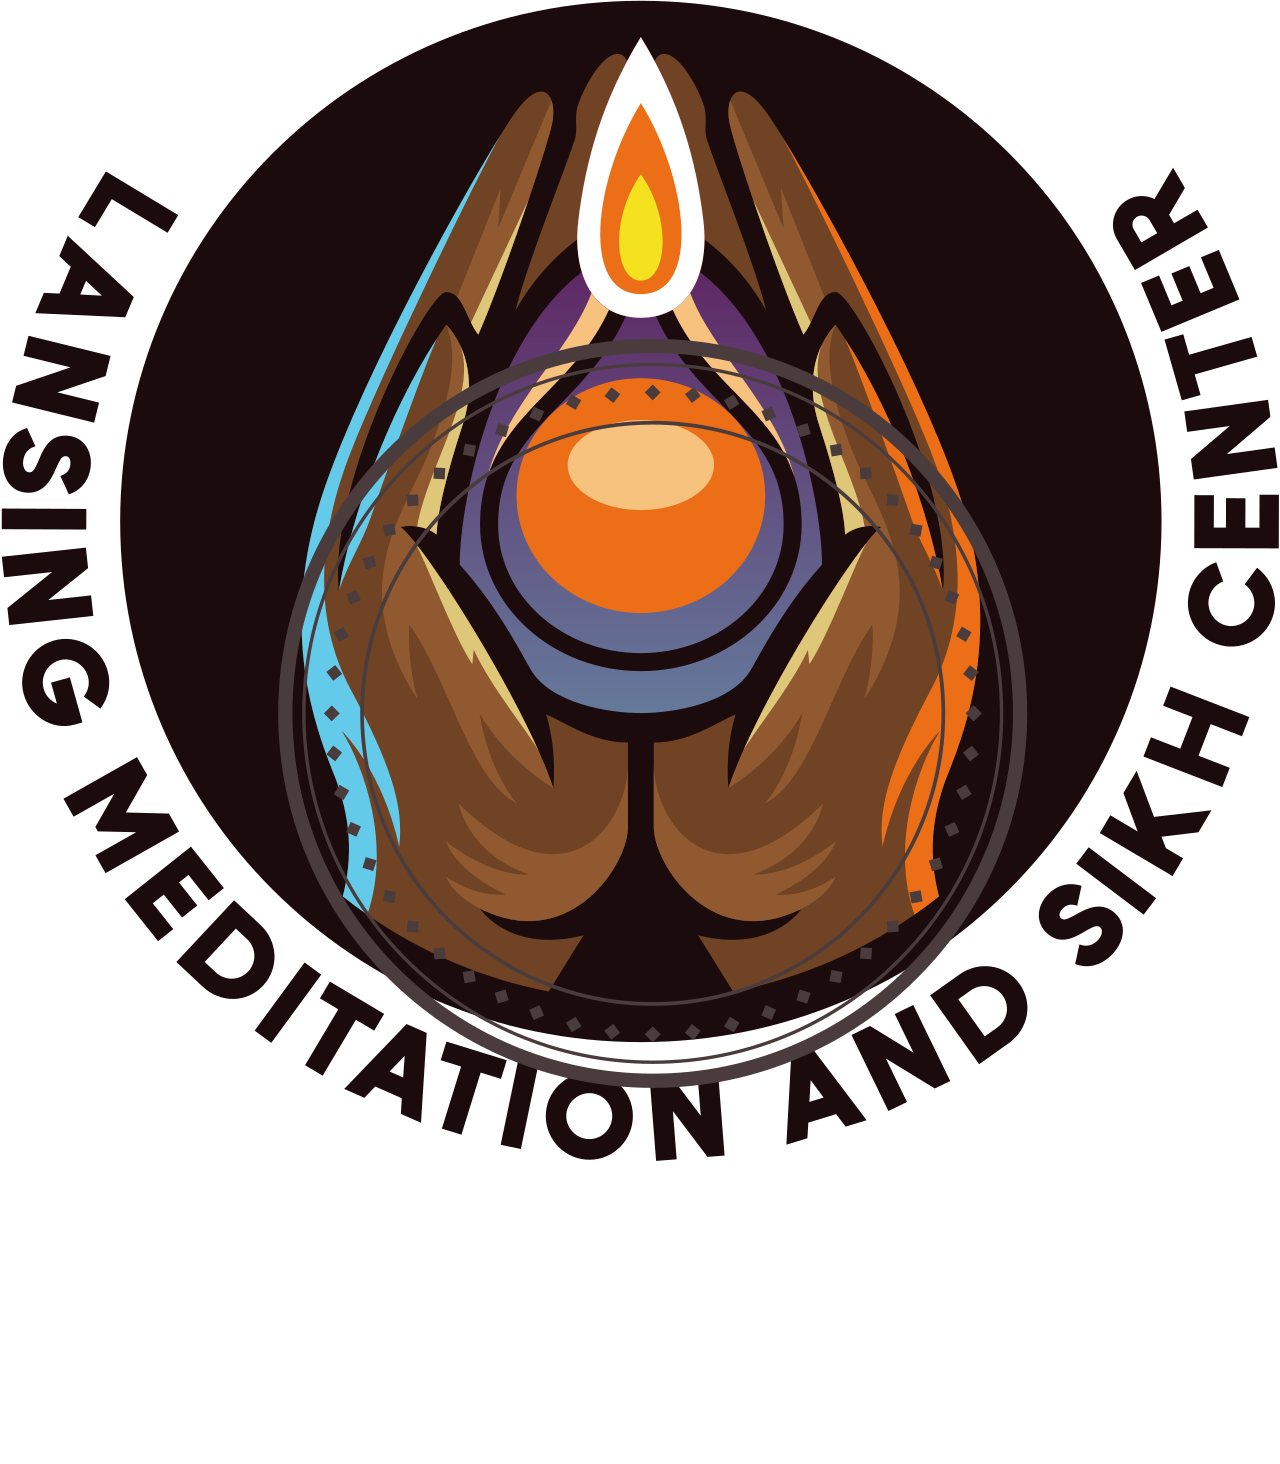 Lansing Meditation and Sikh Center's web page